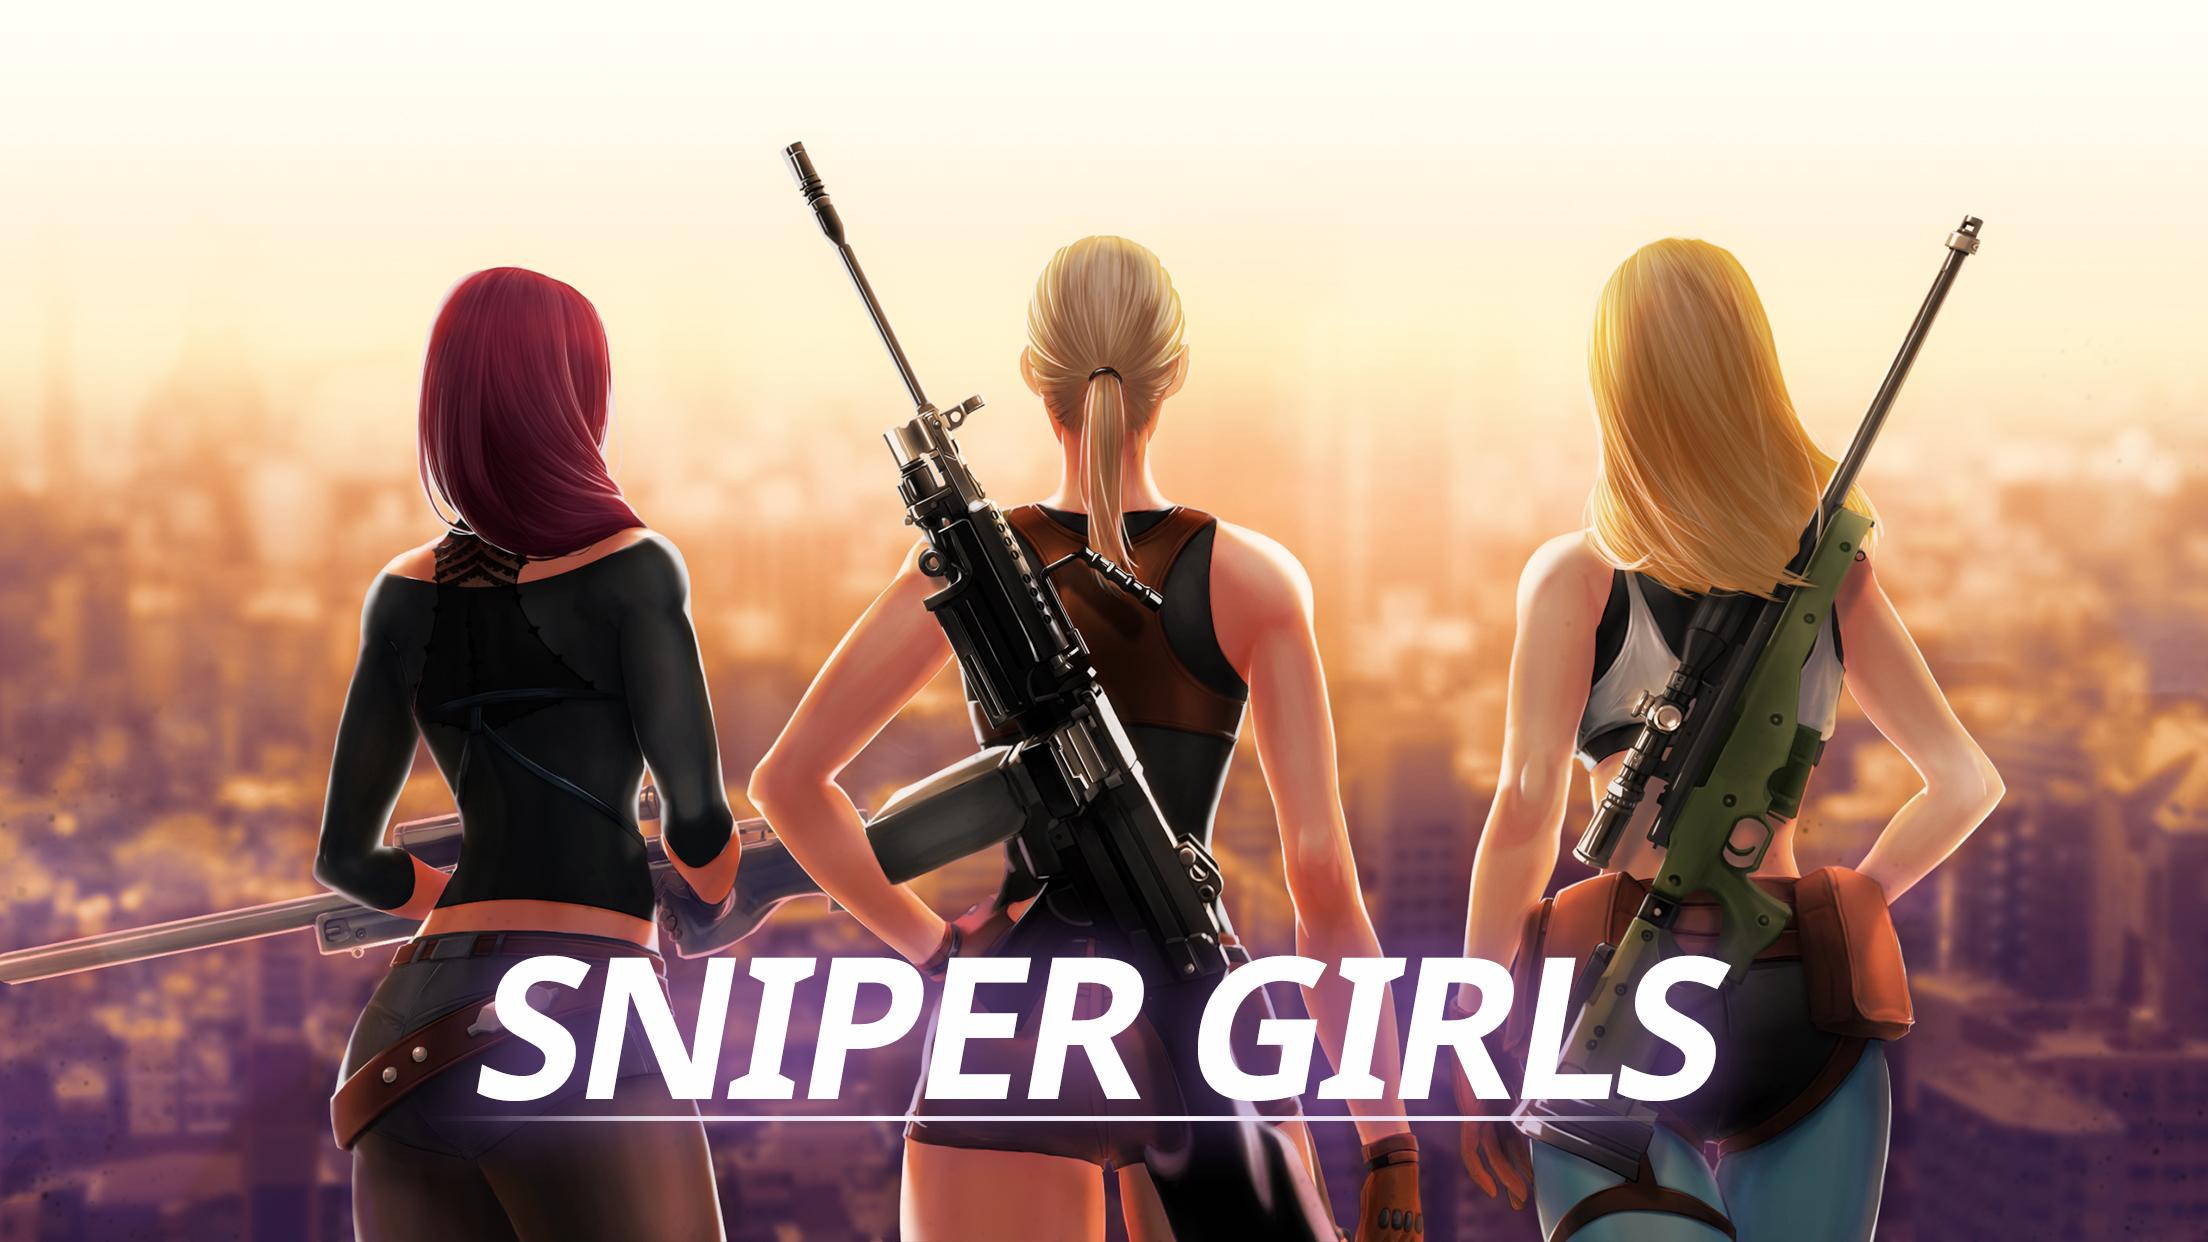 Screenshot 1 of Sniper Girls - 3D သေနတ်ပစ်ခြင်း။ 